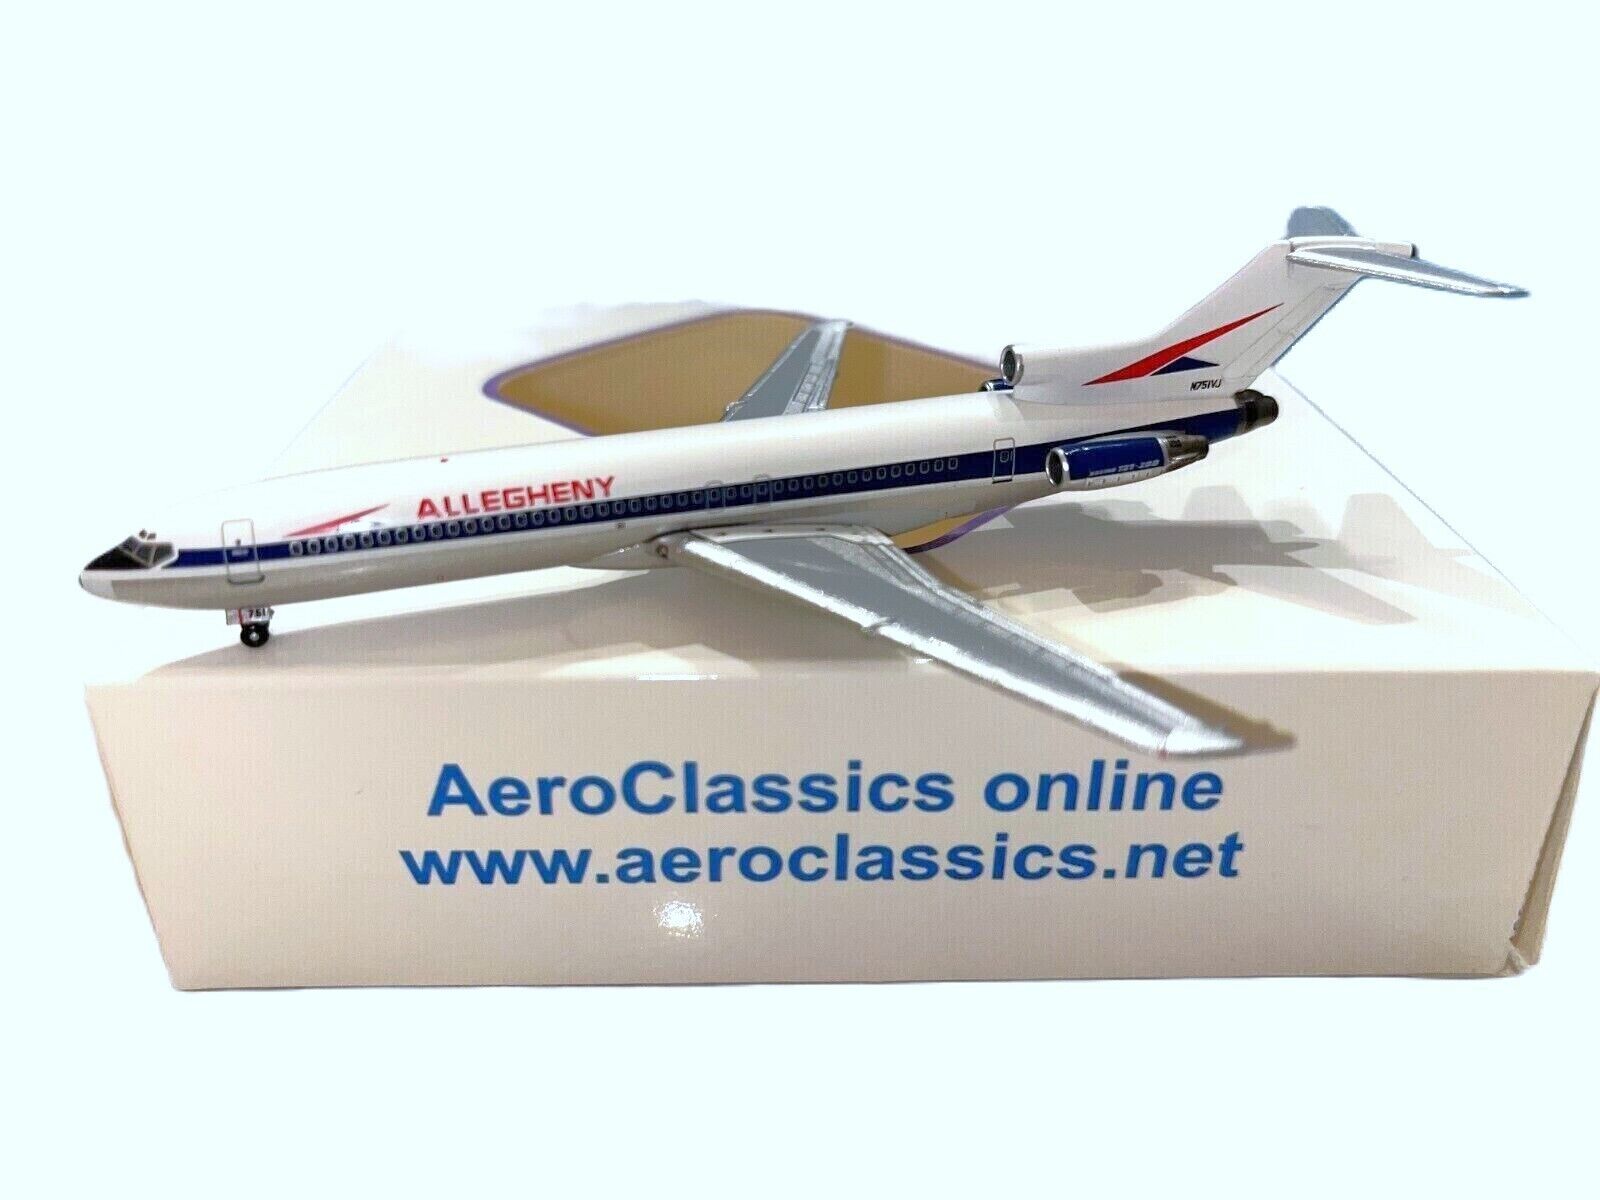 Aeroclassics ACUSA026 Allegheny Airlines B727-200 N751VJ Diecast 1/400 Jet Model